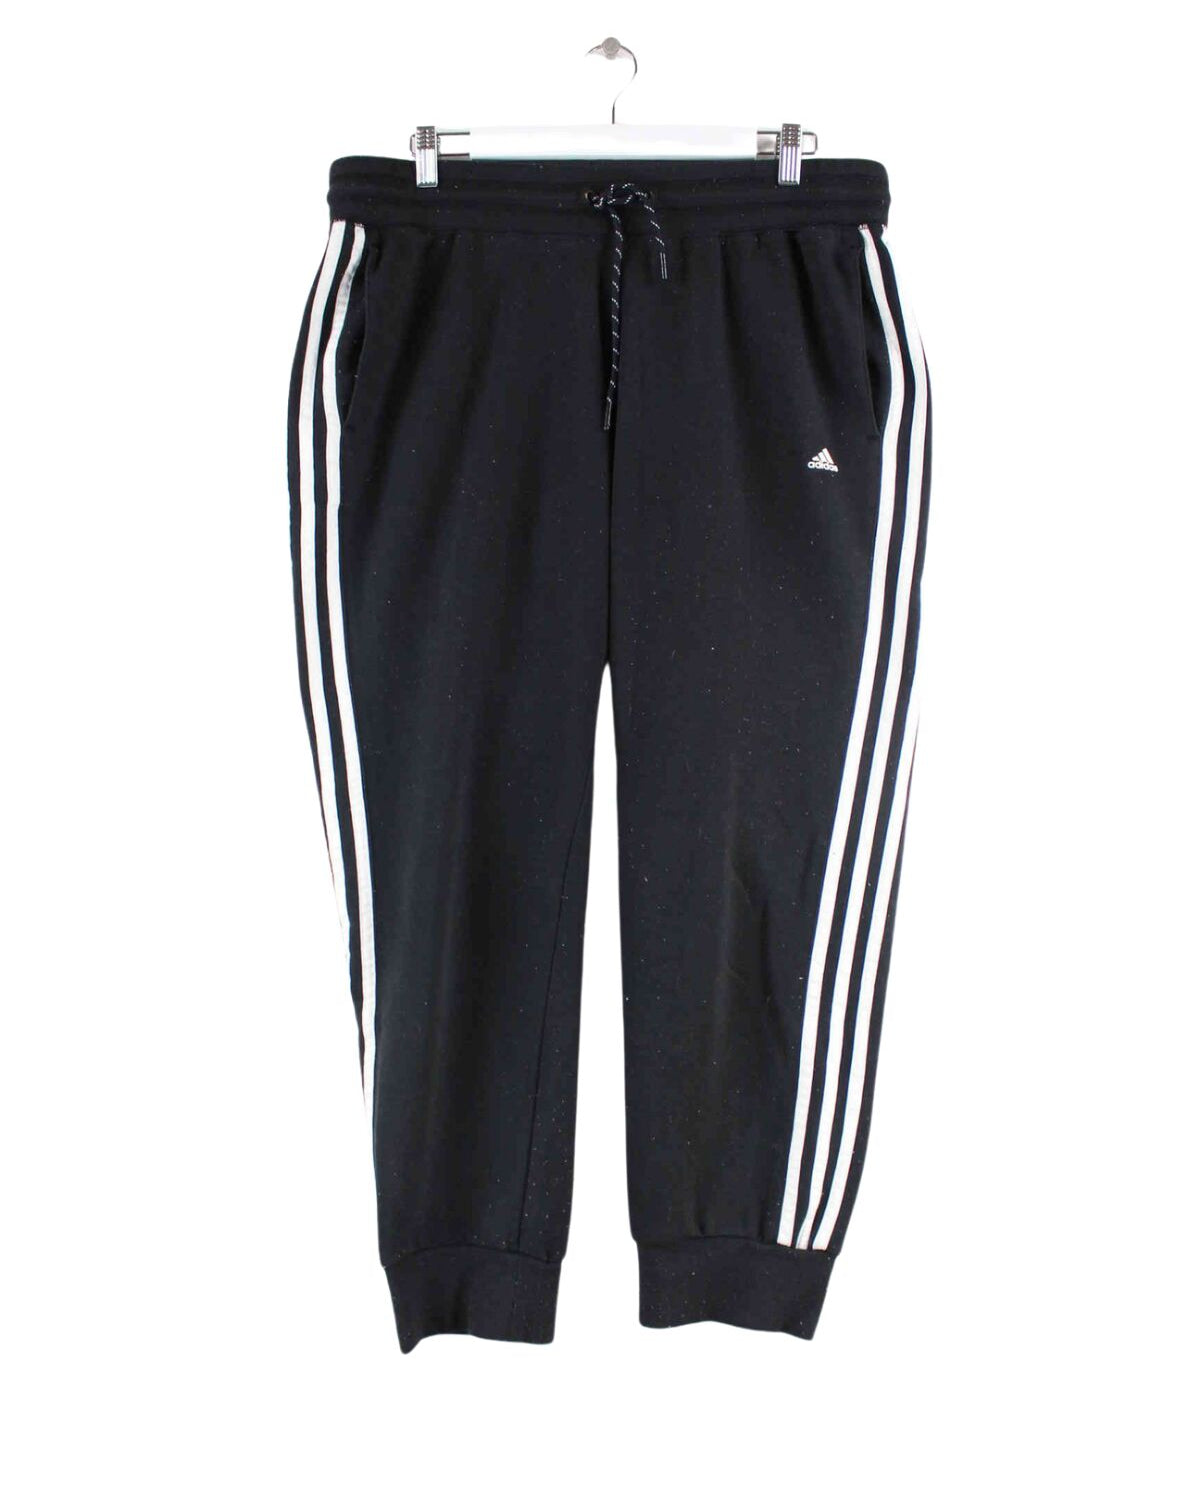 Adidas Damen Essentials 3-Stripes Jogginghose Schwarz L (front image)